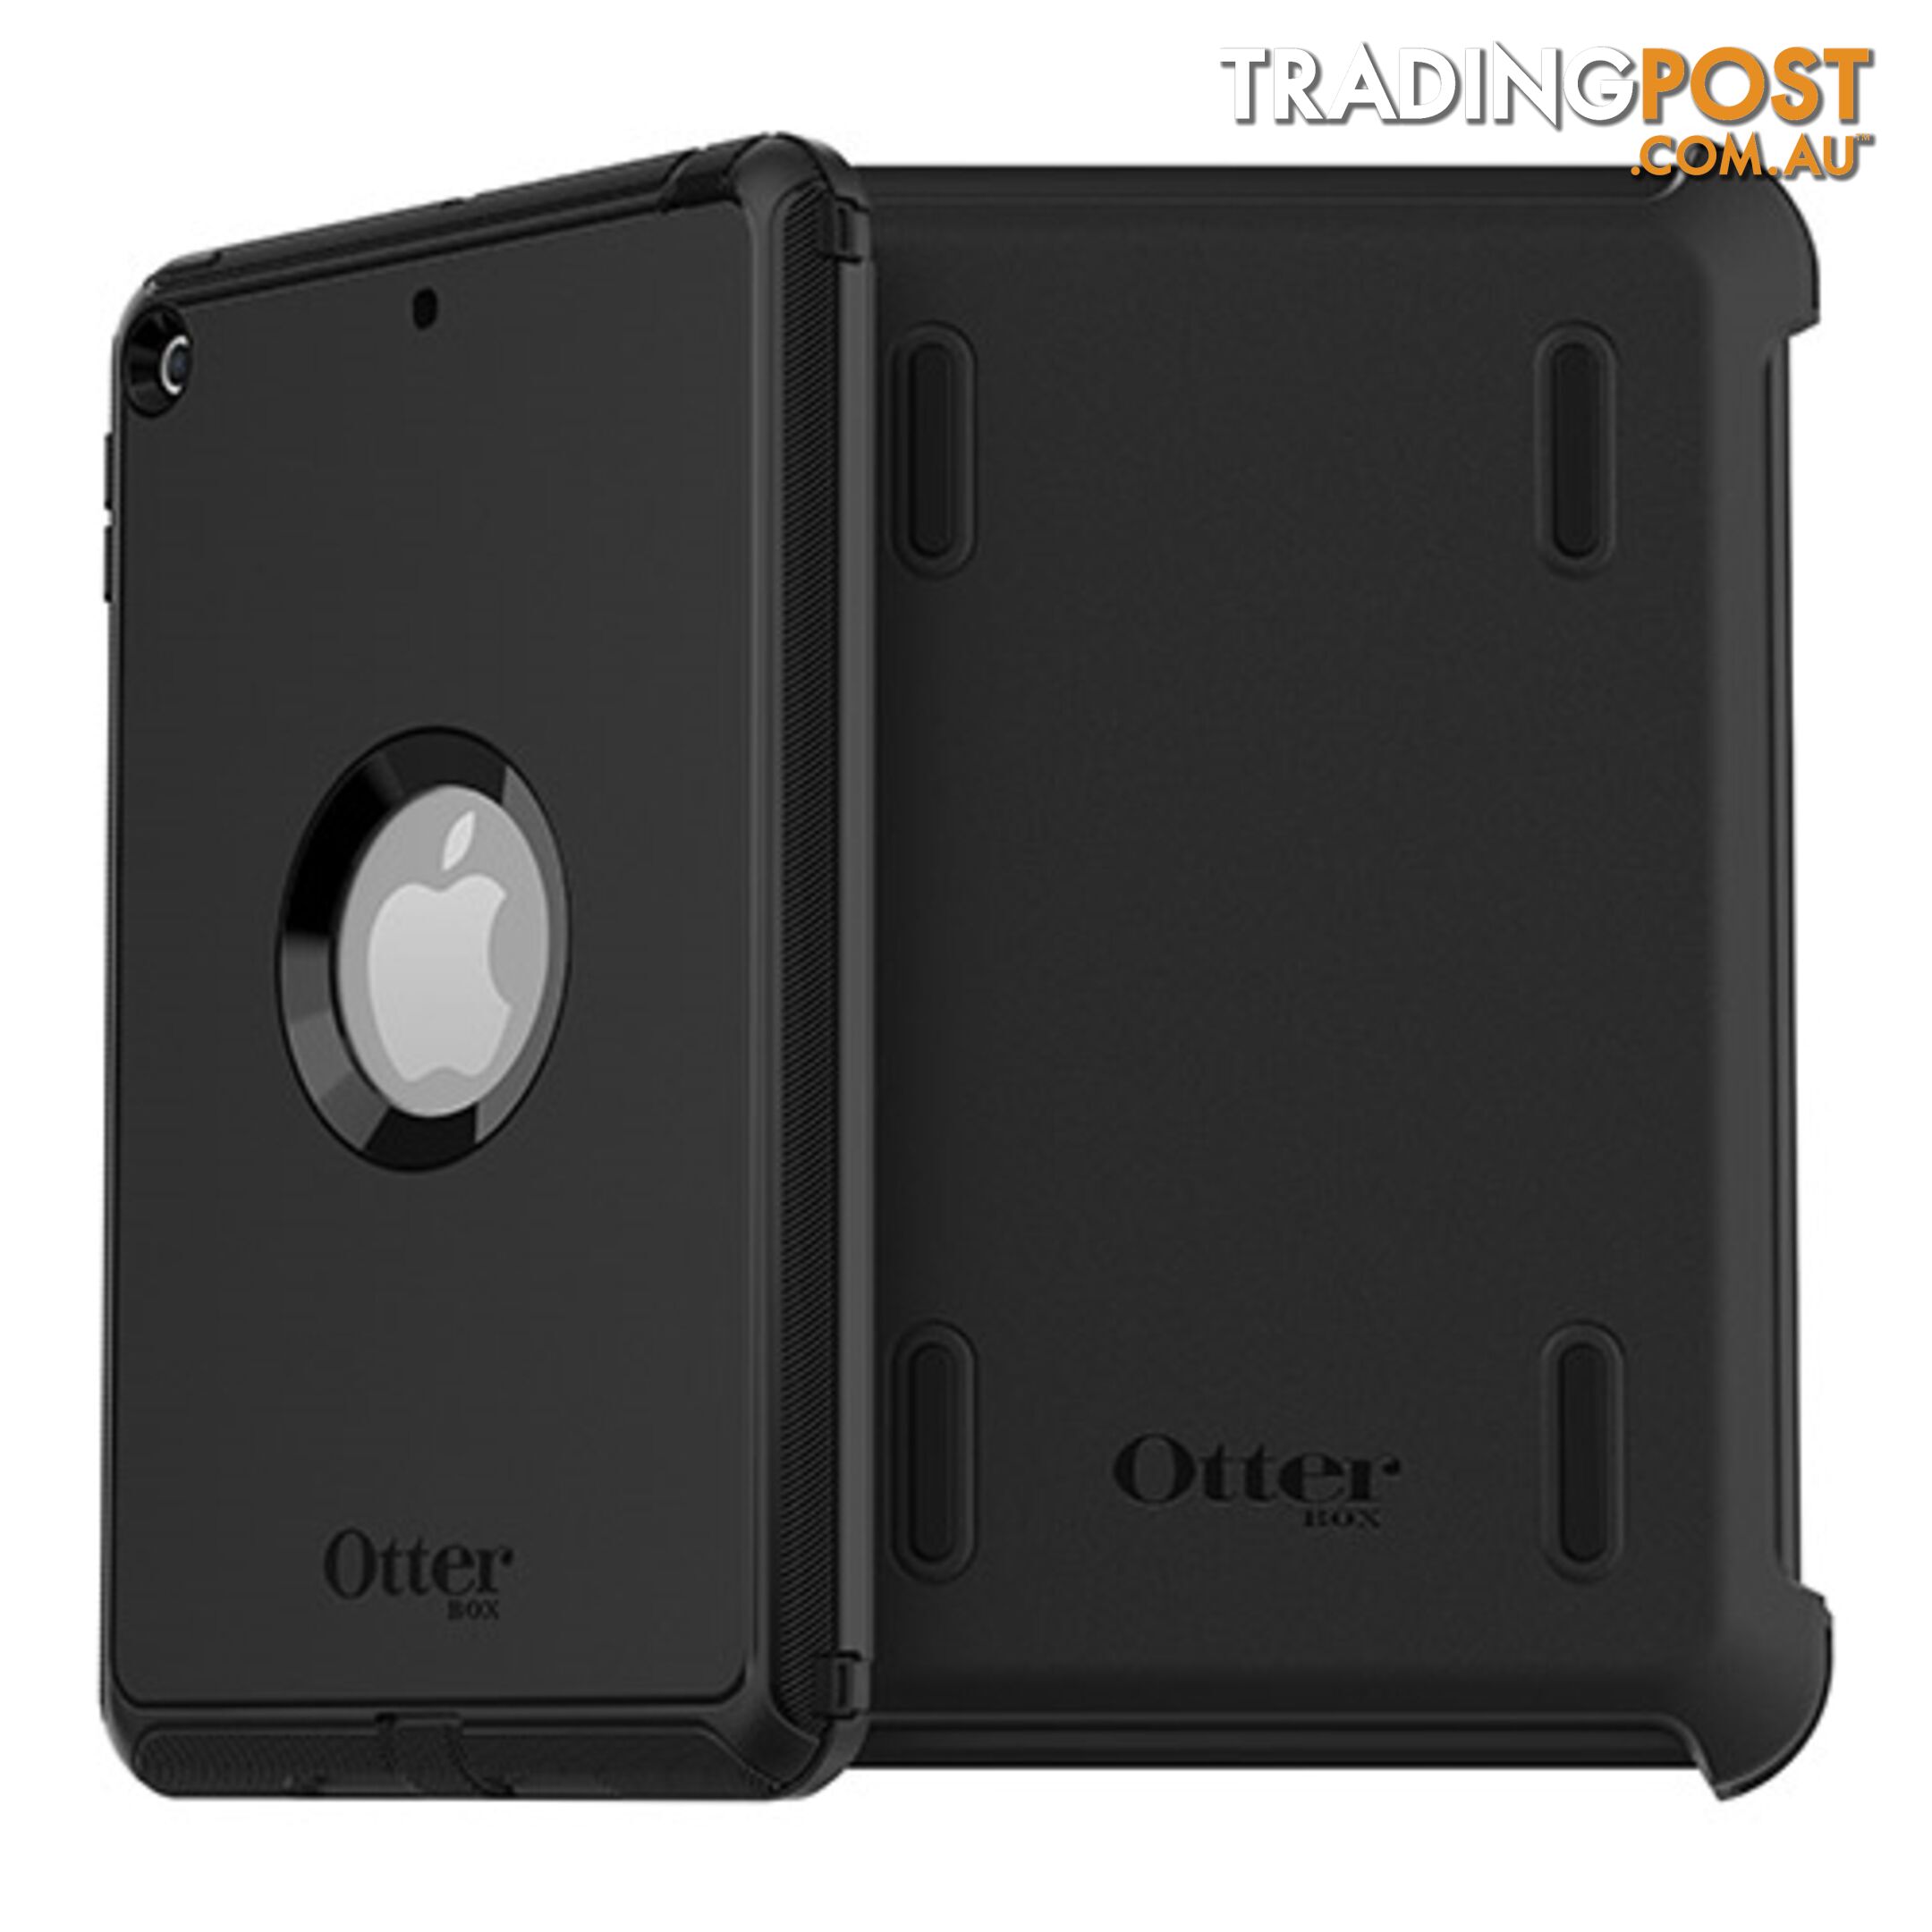 OtterBox Defender Case suits iPad Mini 5 - Black - 660543507185/77-62216 - OtterBox